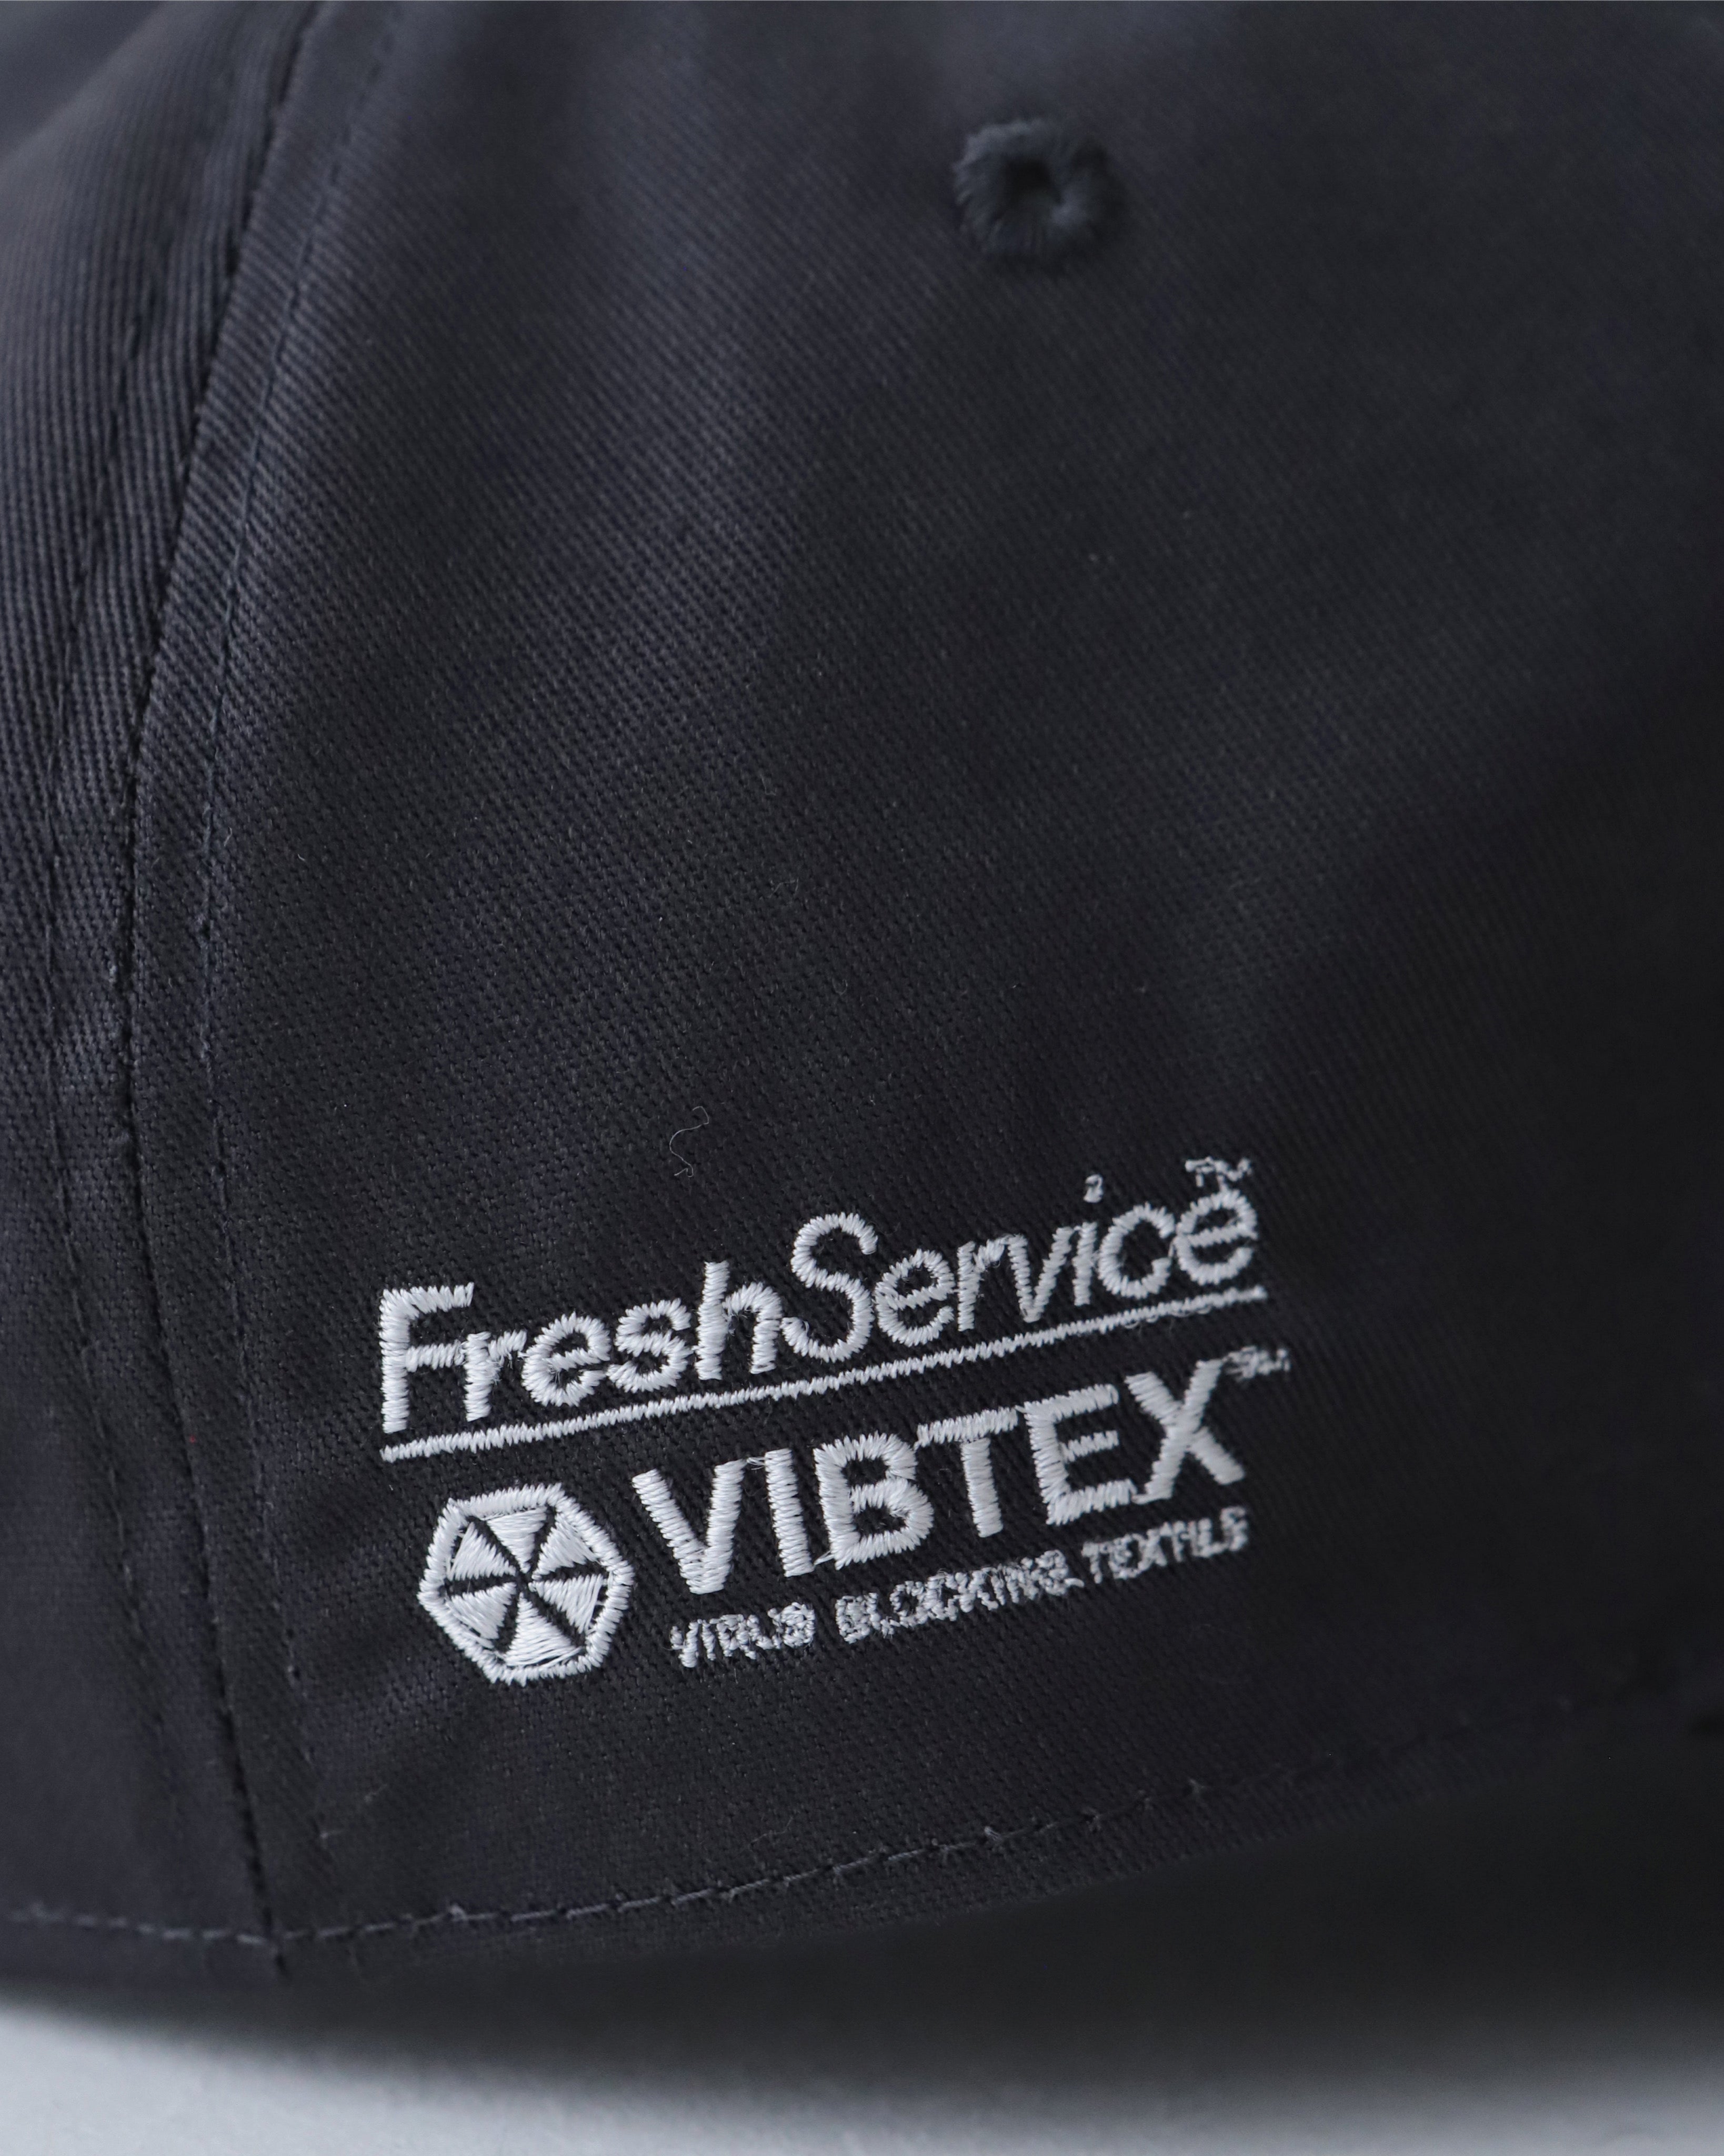 VIBTEX for FreshService 6 PANEL CAP